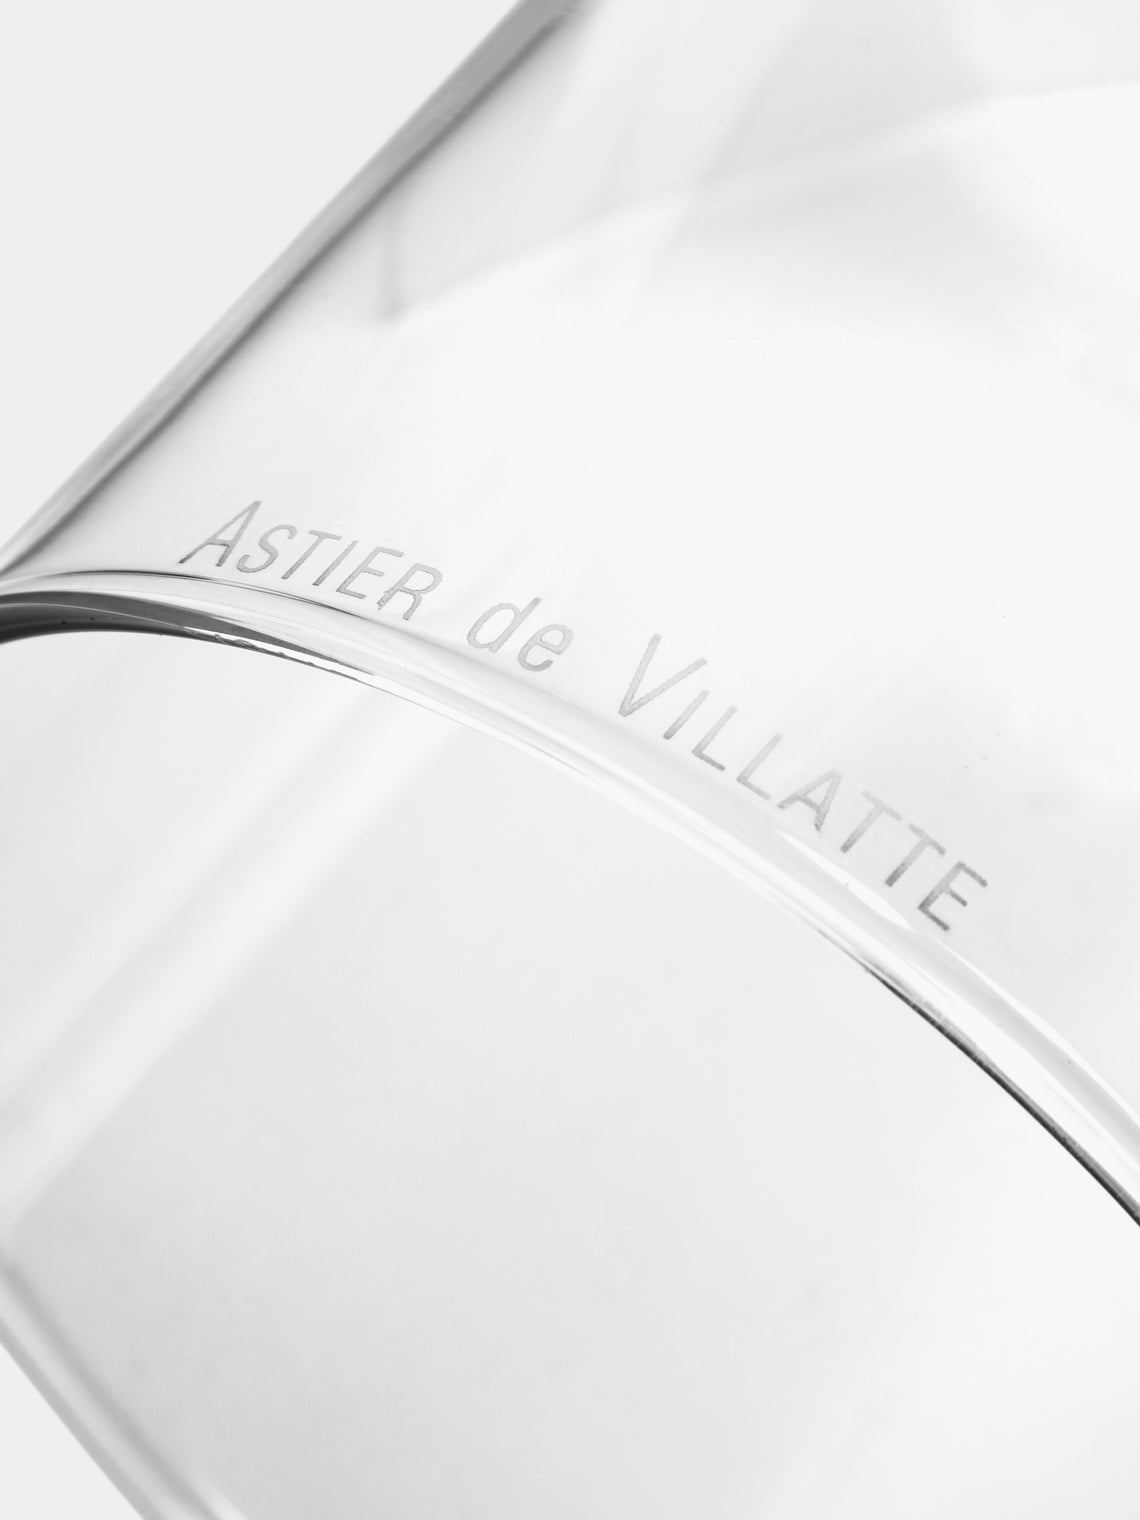 Astier de Villatte - Glass Cloche - Clear - ABASK